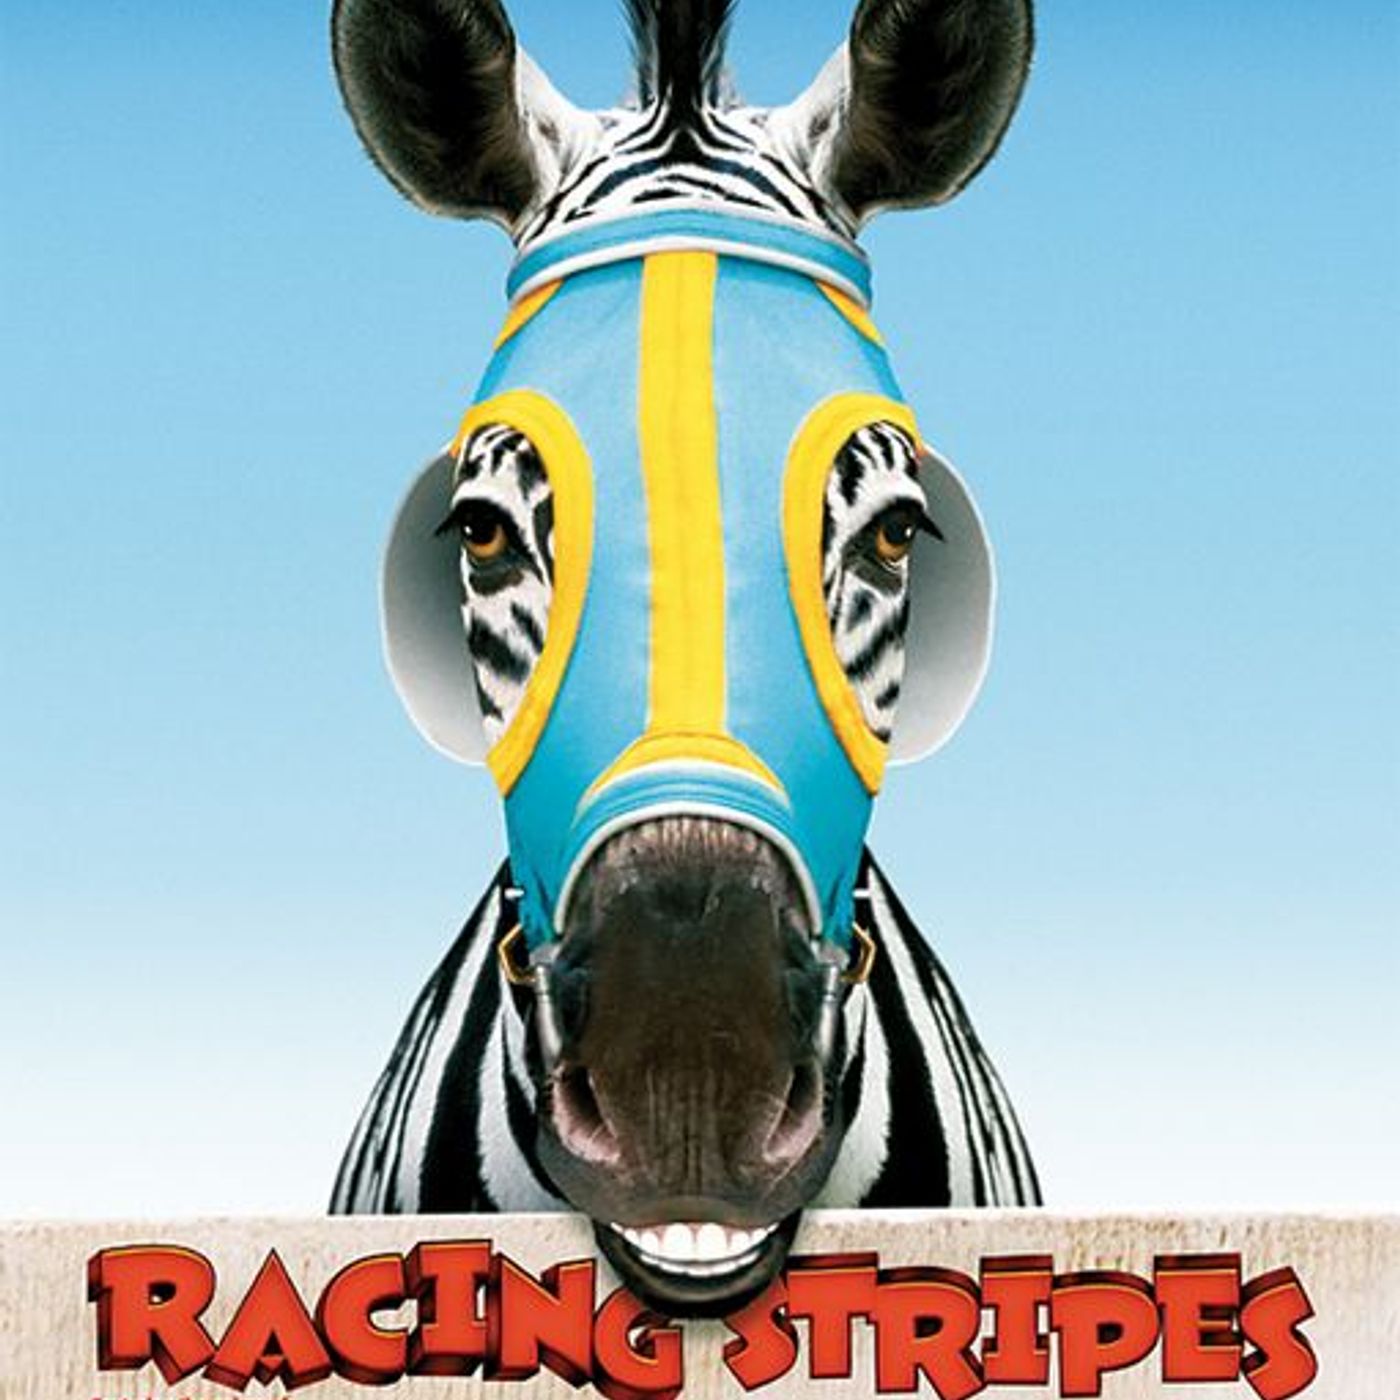 110 - Racing Stripes (Adam Sandler Film School)